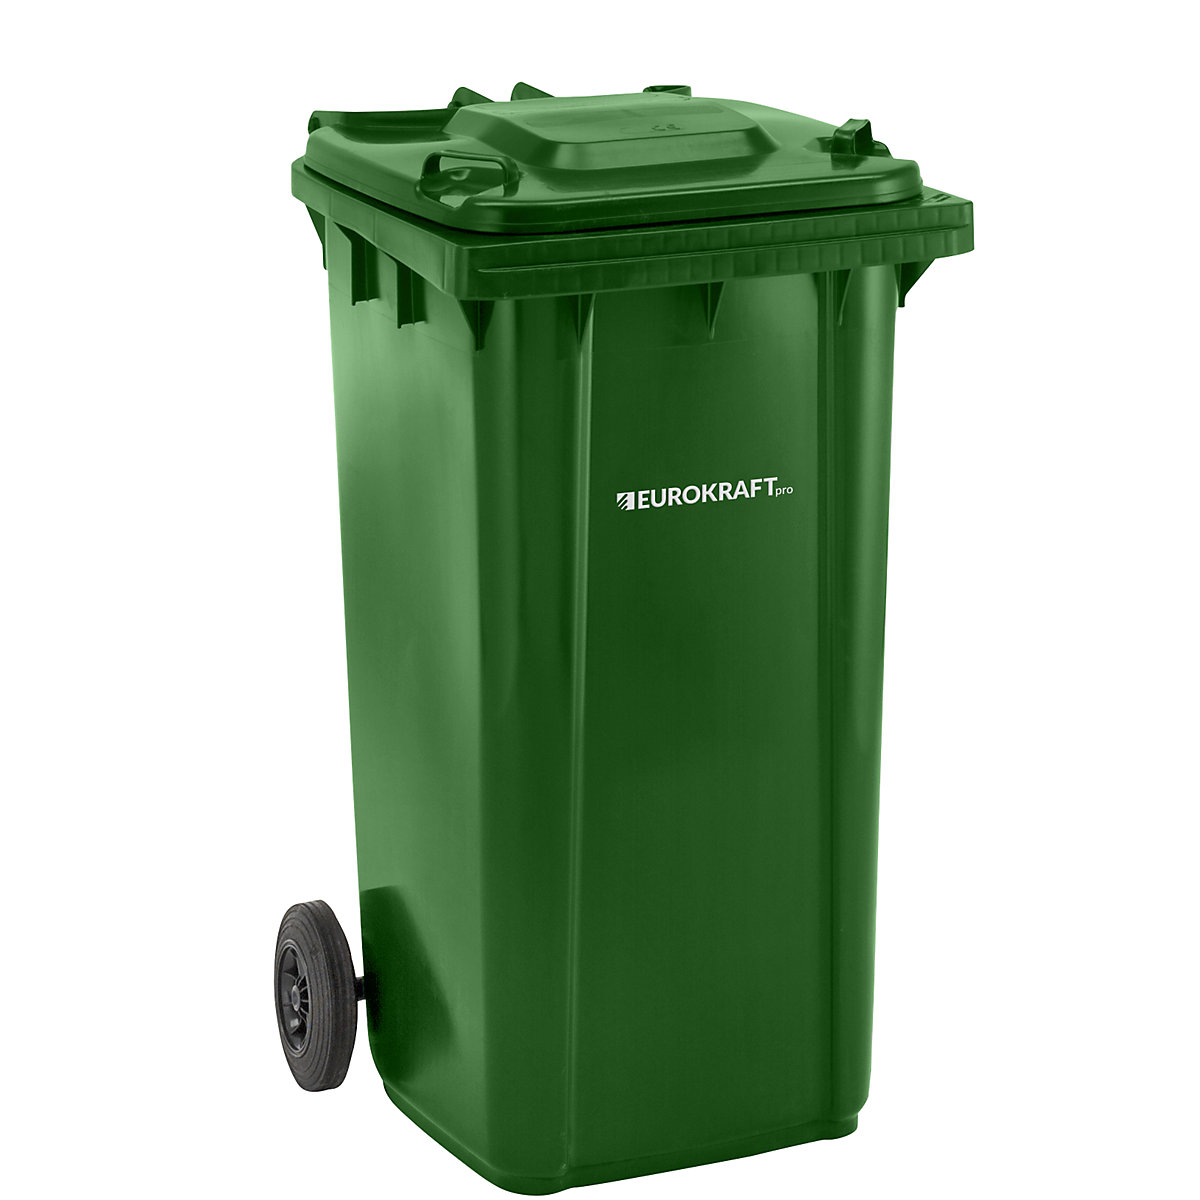 EUROKRAFTpro – Pubelă de gunoi din plastic, DIN EN 840, volum 240 l, lăț. x î. x ad. 580 x 1100 x 740 mm, verde, minimum 5 buc.